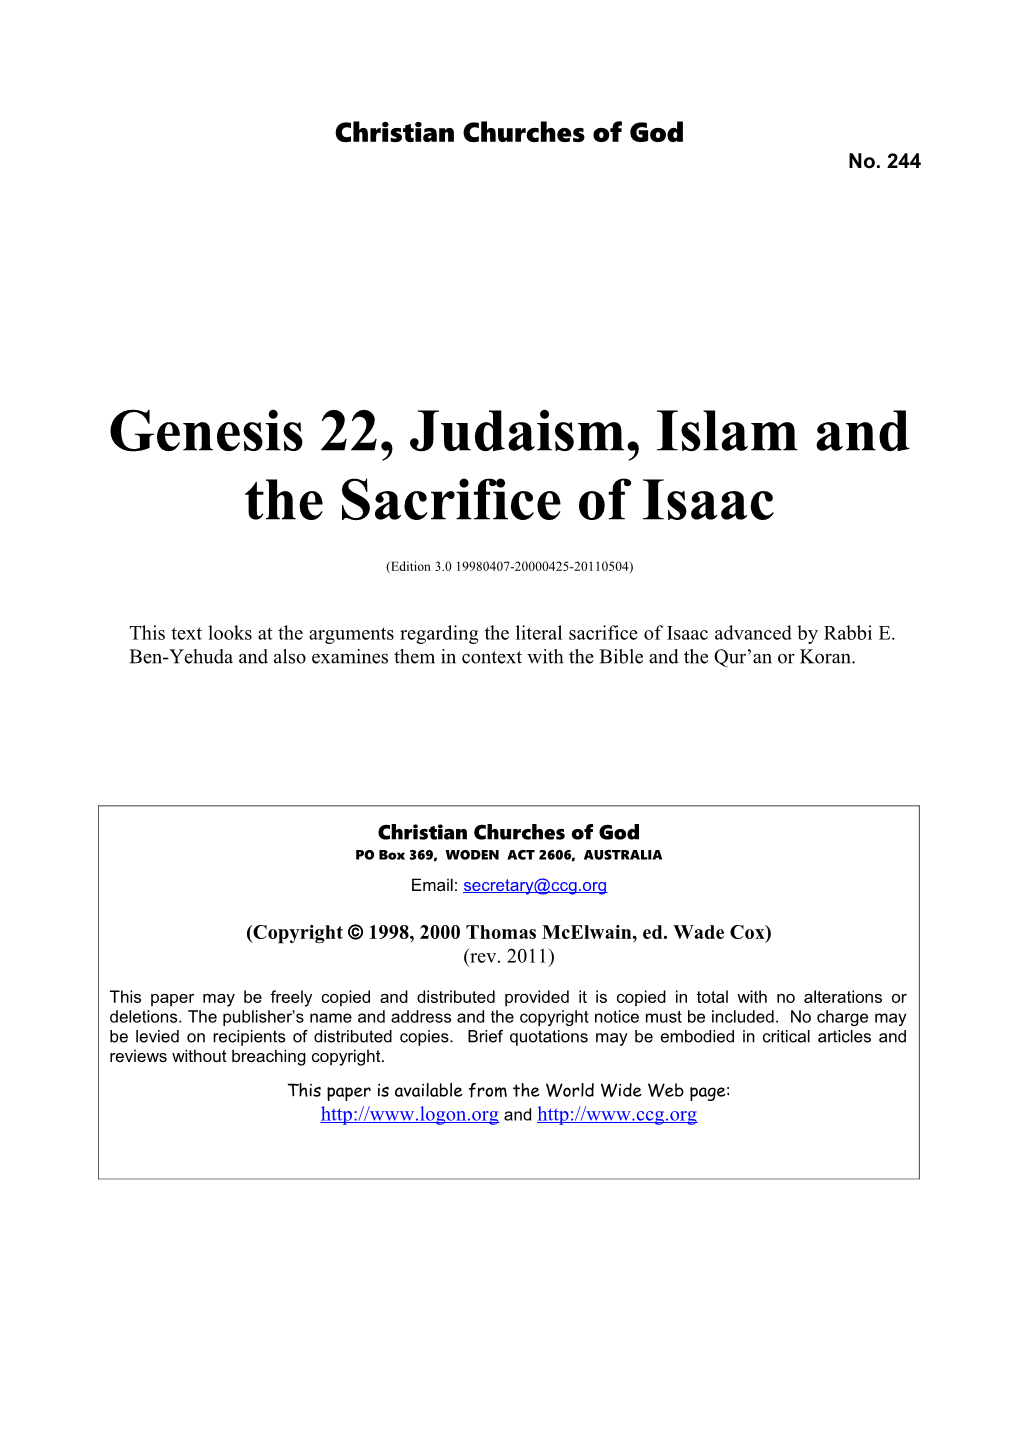 Genesis 22, Judaism, Islam and the Sacrifice of Isaac (No. 244)